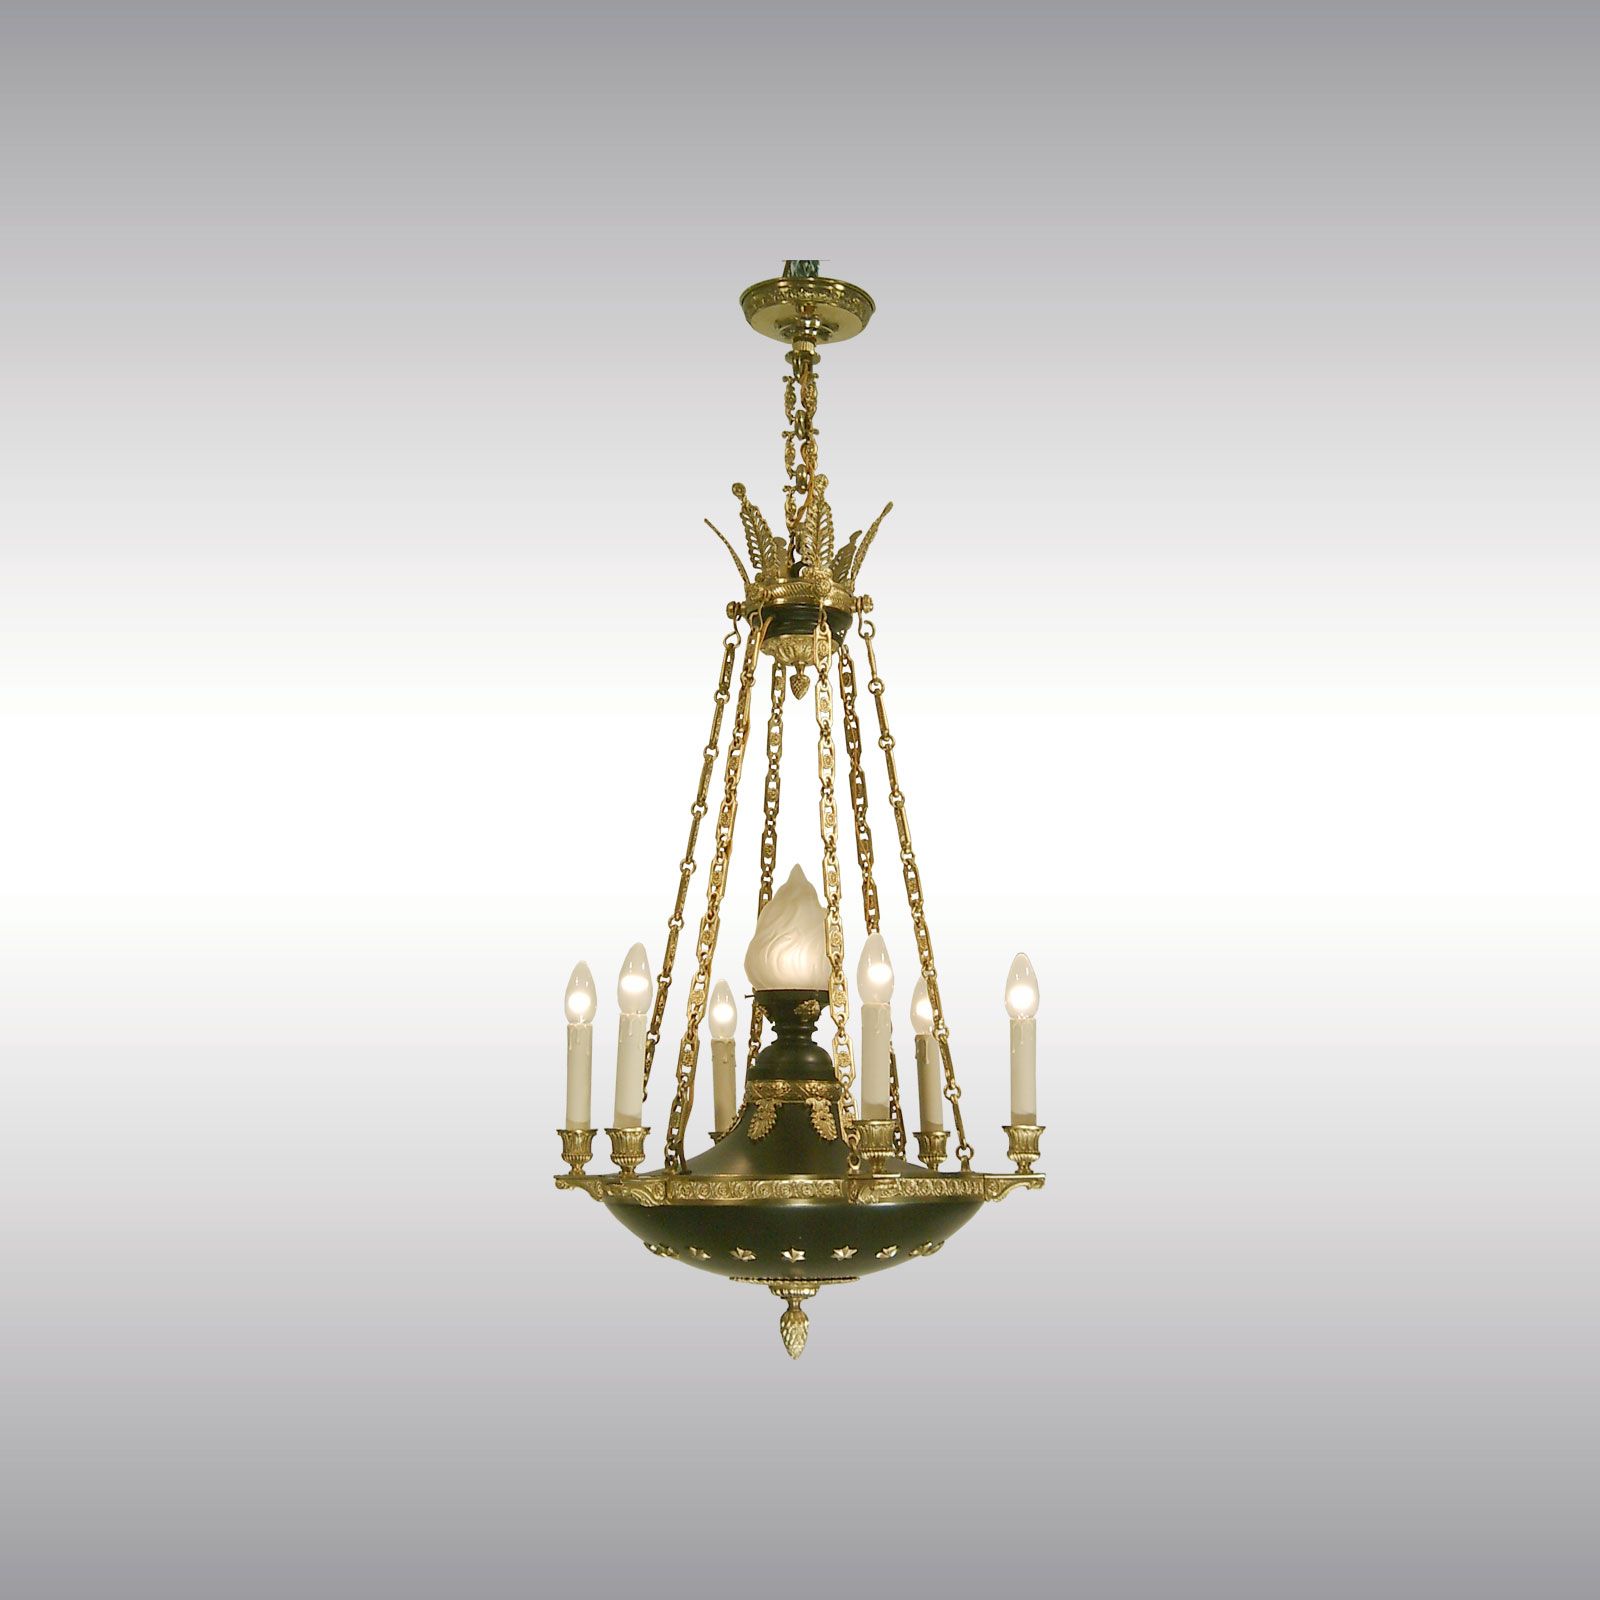 WOKA LAMPS VIENNA - OrderNr.: 80082|Historistischer Empireluster - Design: Austrian Mastercraft